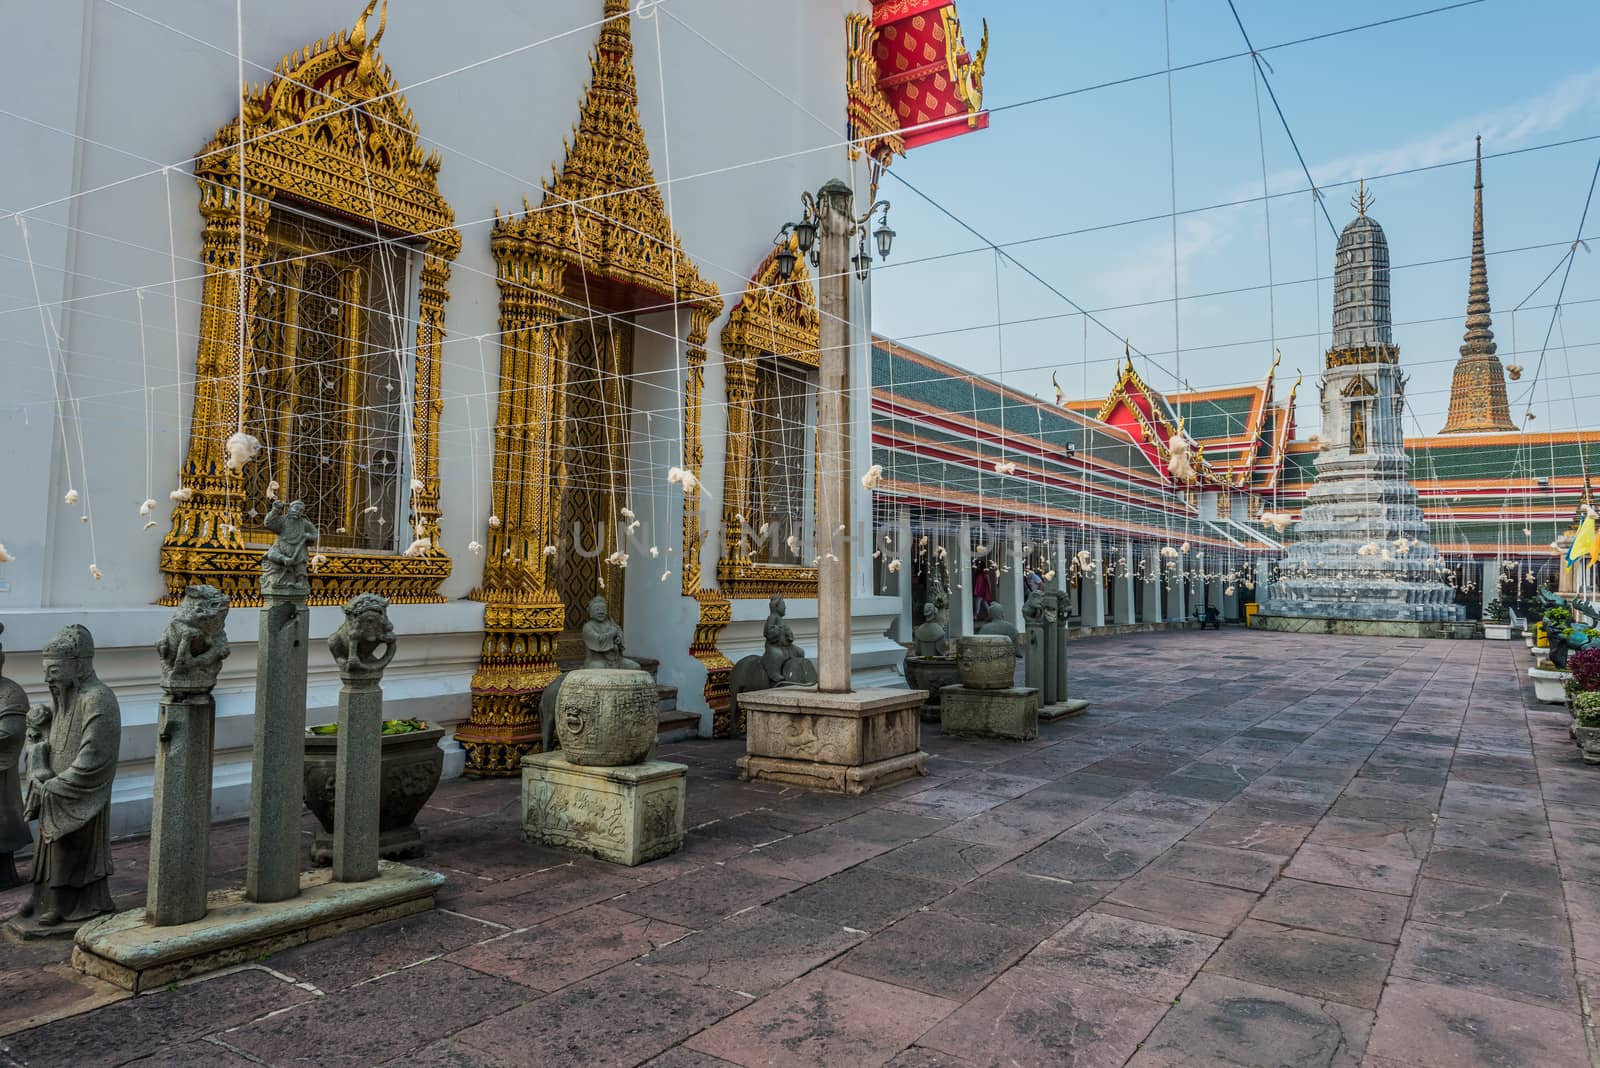 temple interior details Wat Pho temple Bangkok Thailand